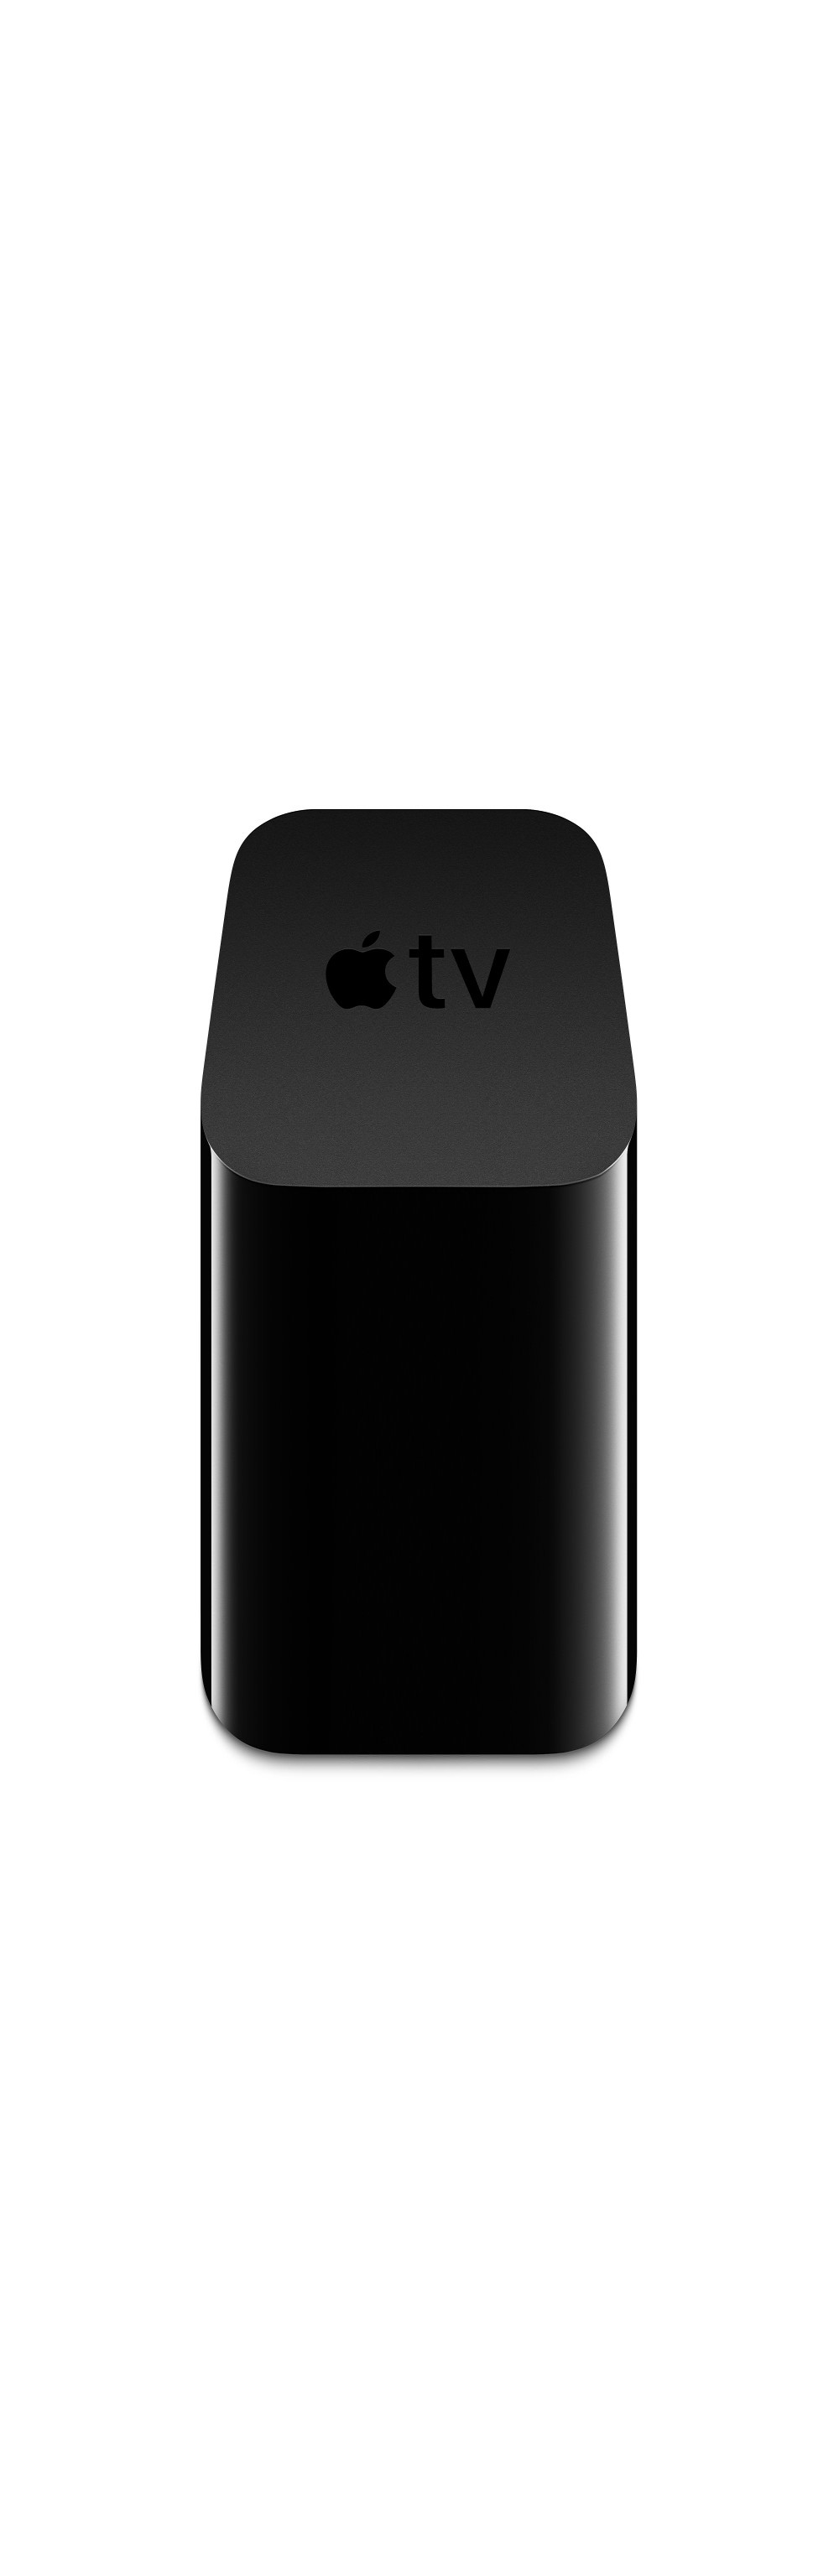 Apple TV Digital 4K A1842 32GB